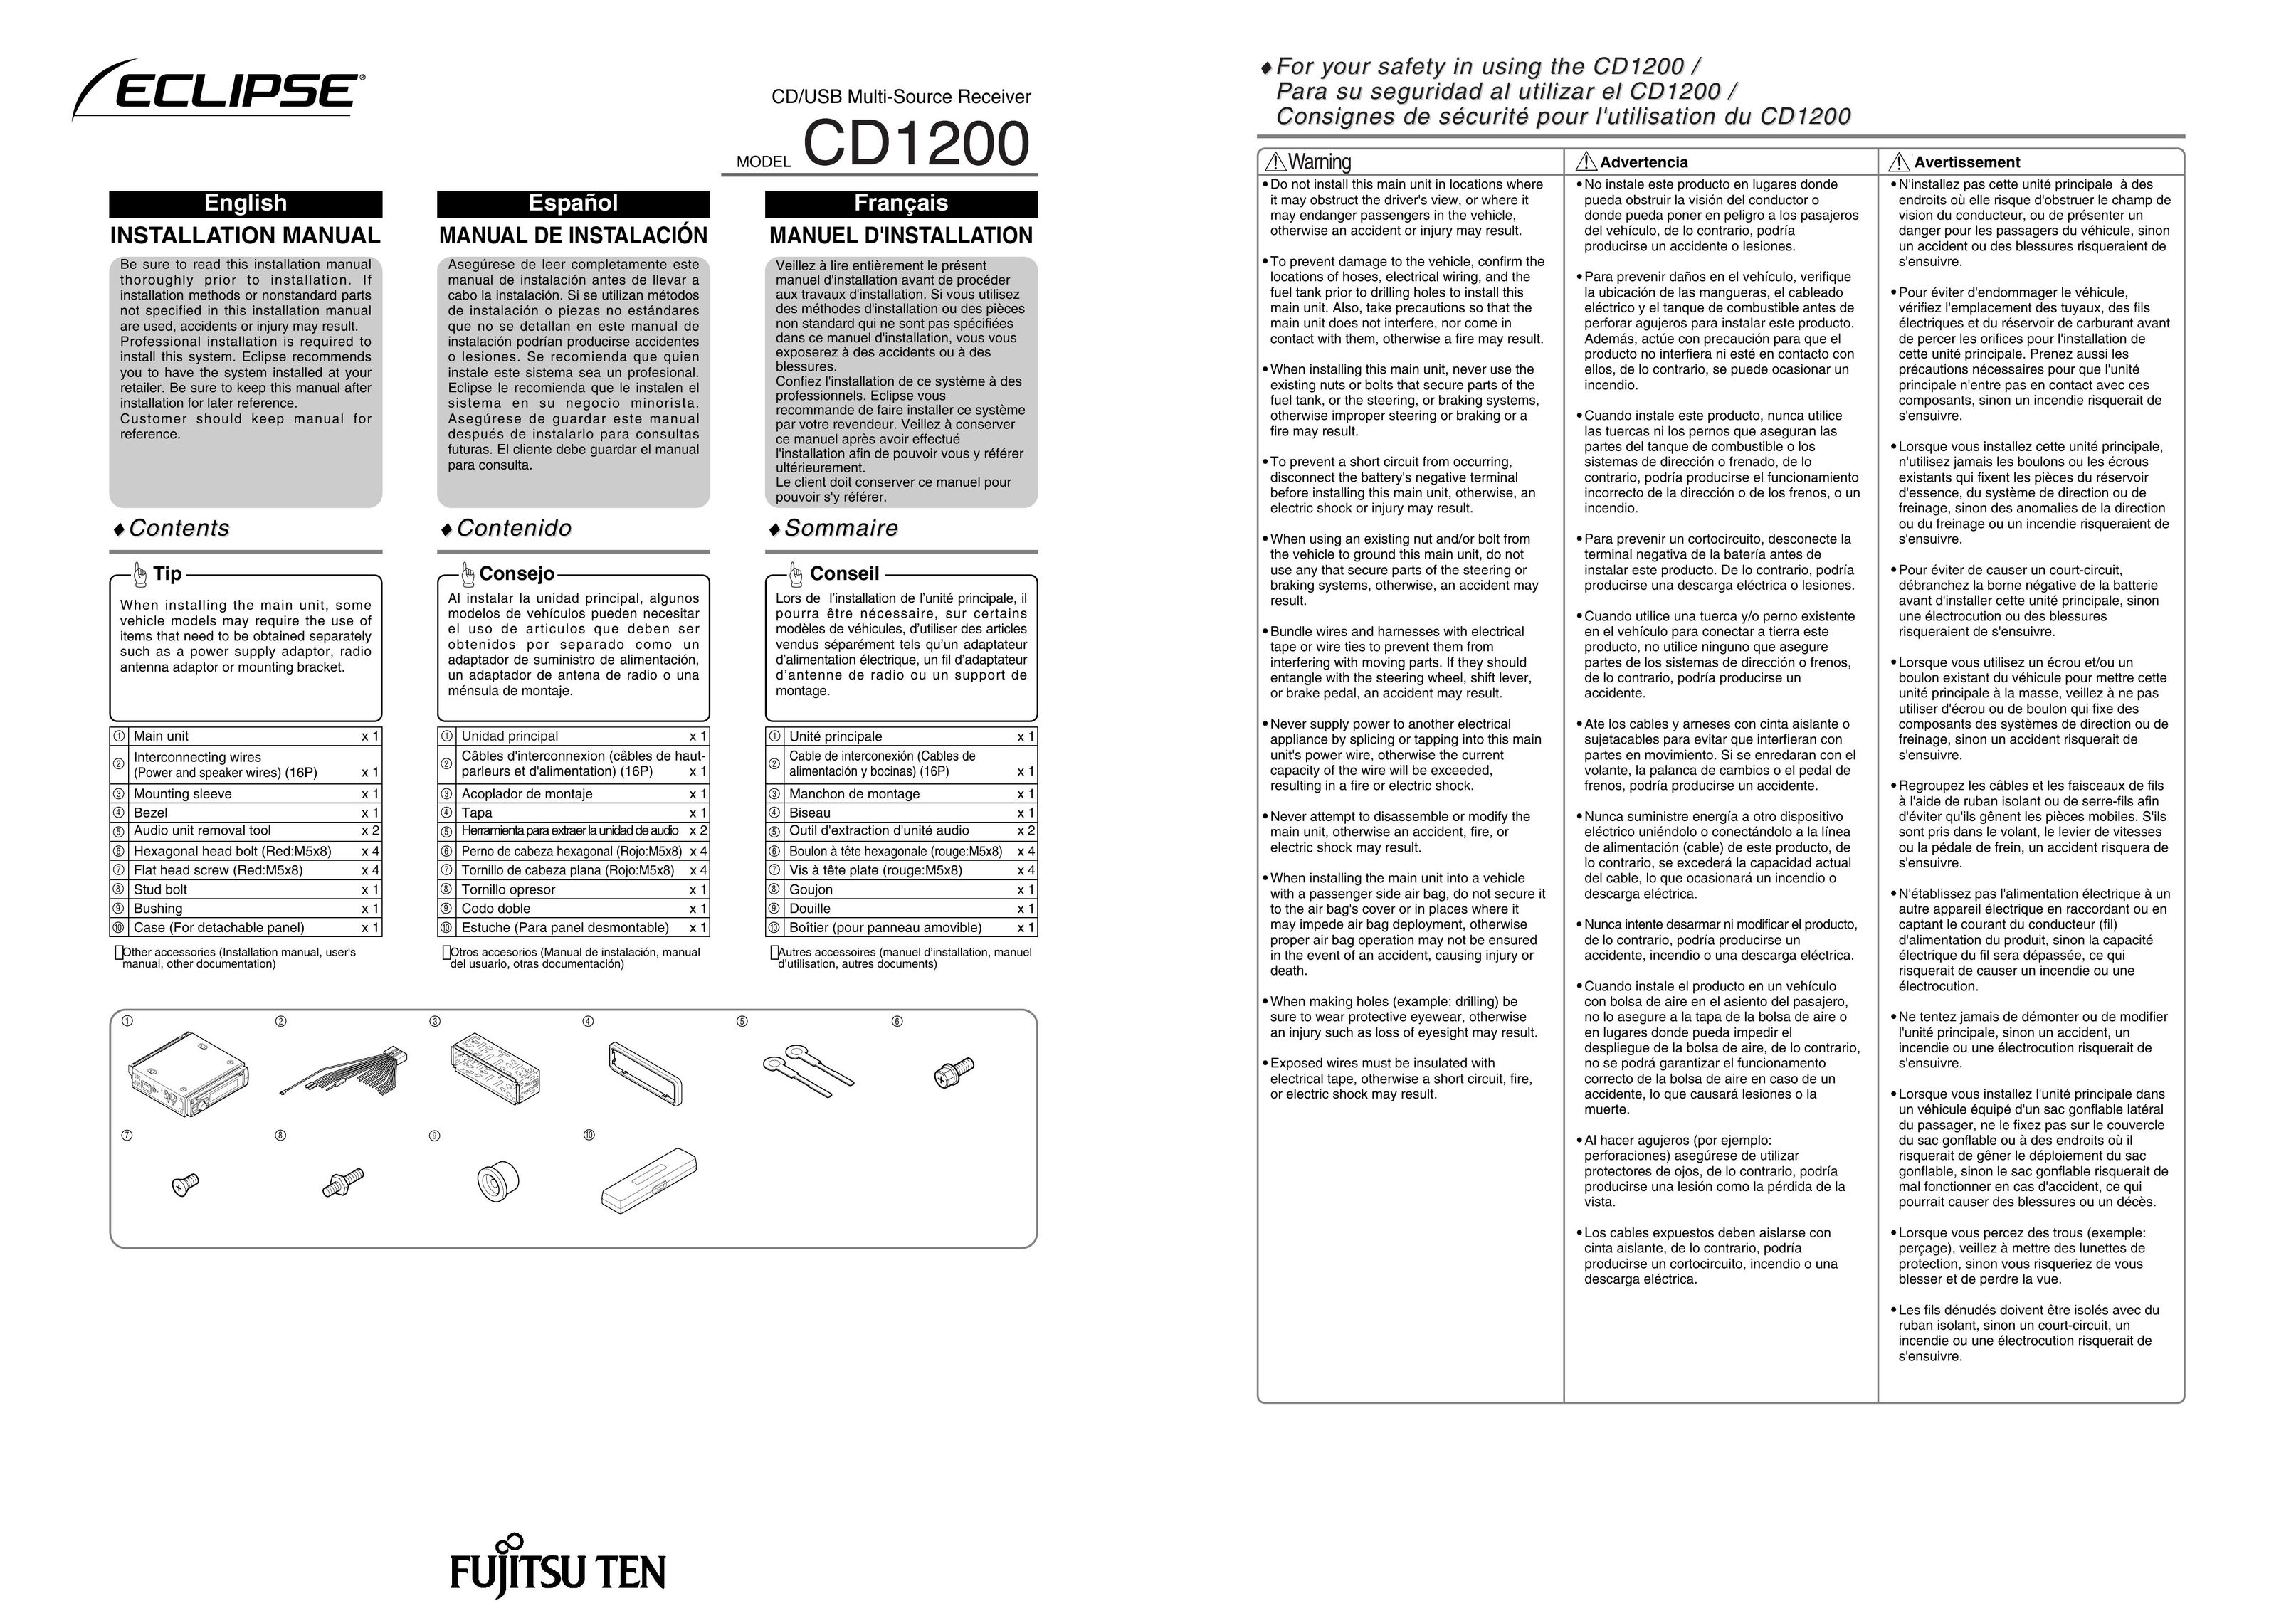 Eclipse - Fujitsu Ten CD1200 MP3 Player User Manual